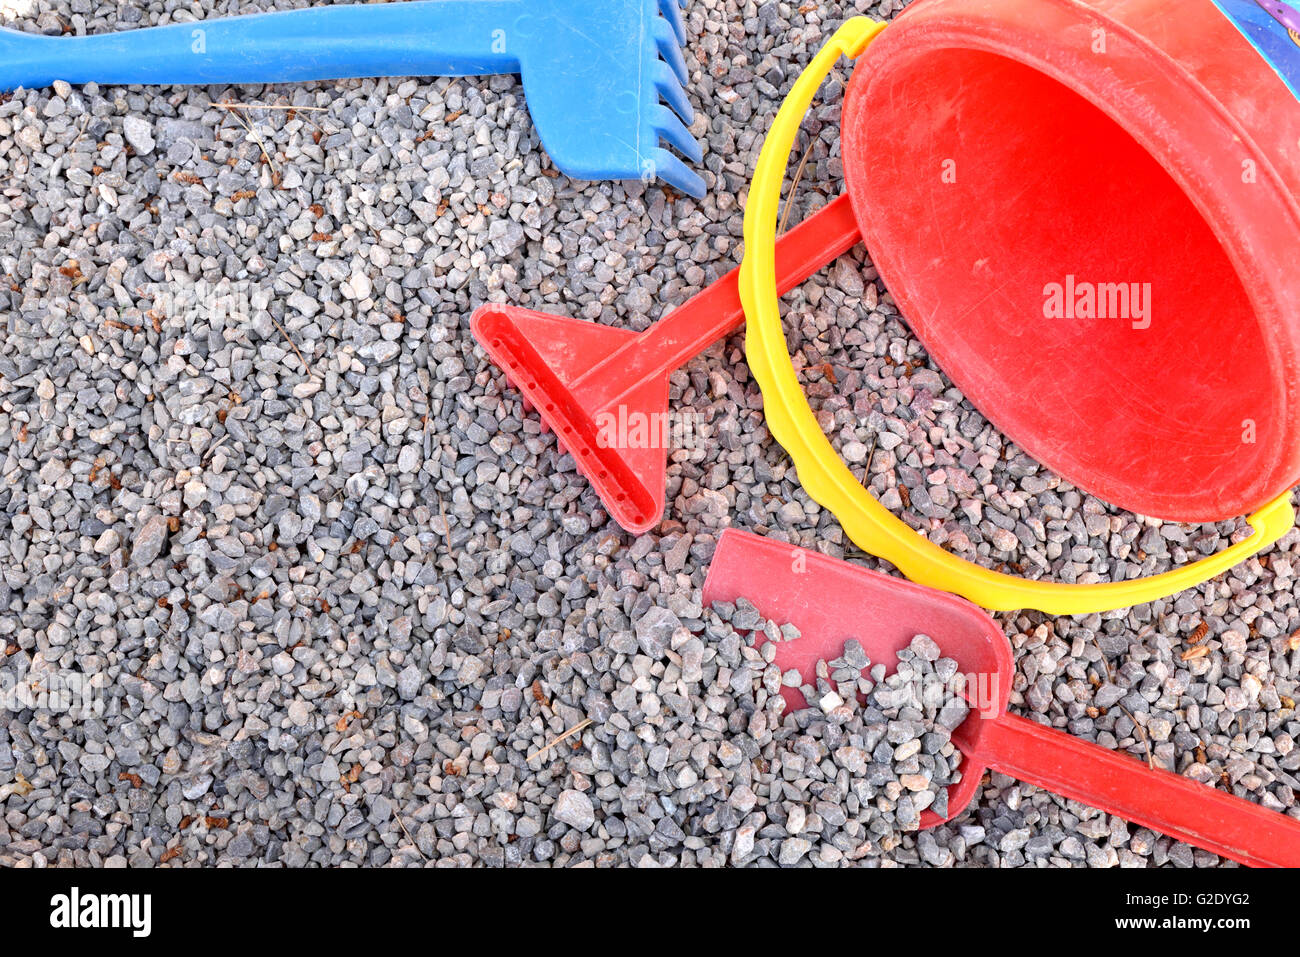 Rake, shovel and bucket child on playground gravel. Top view. Horizontal composition. Stock Photo